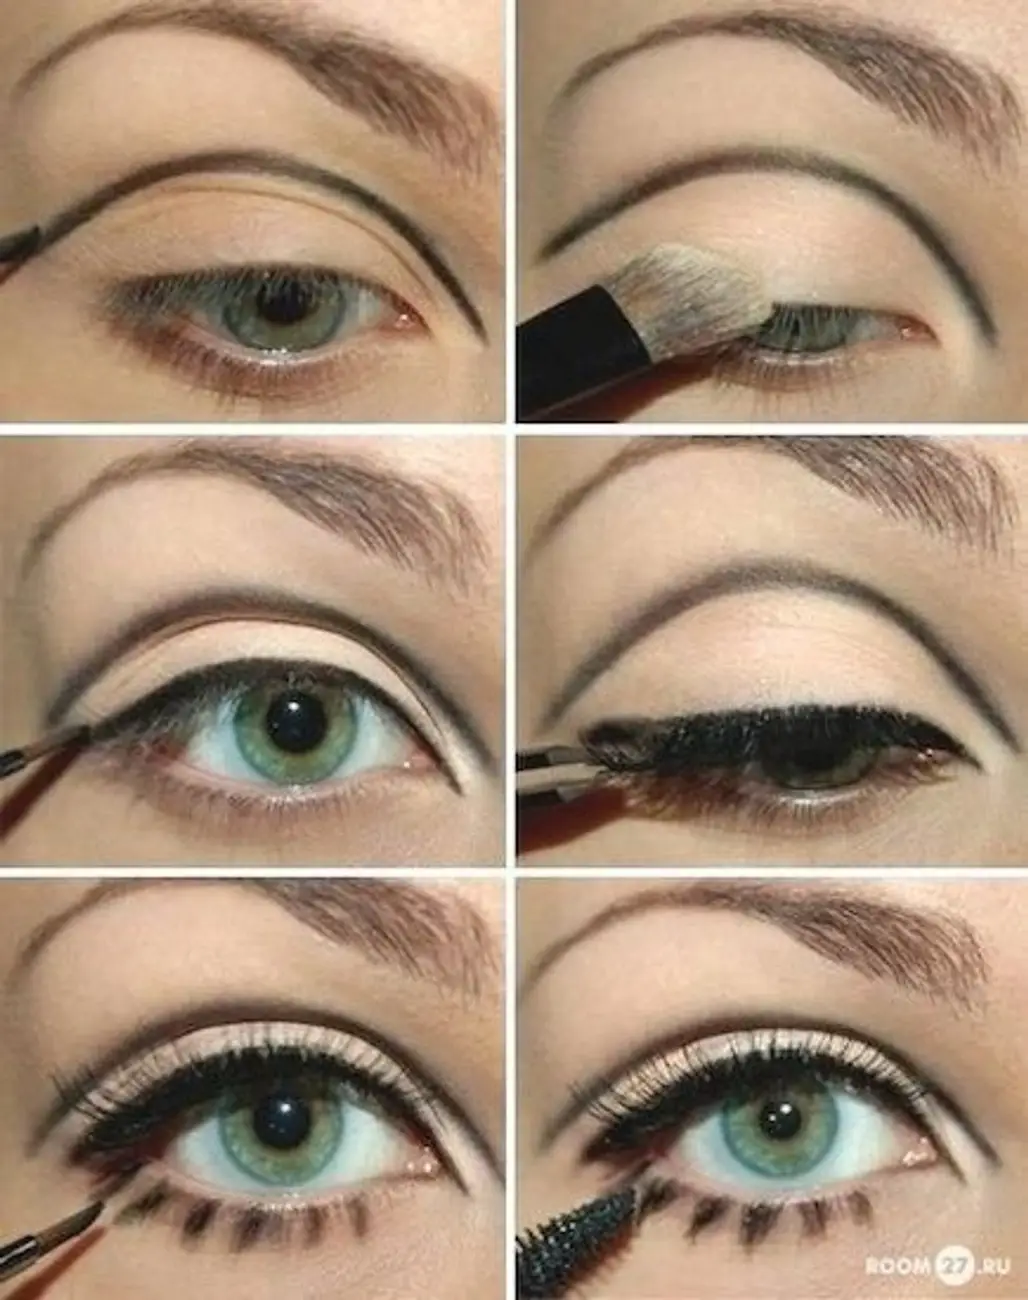 eyebrow,face,eye,eyelash,eyelash extensions,